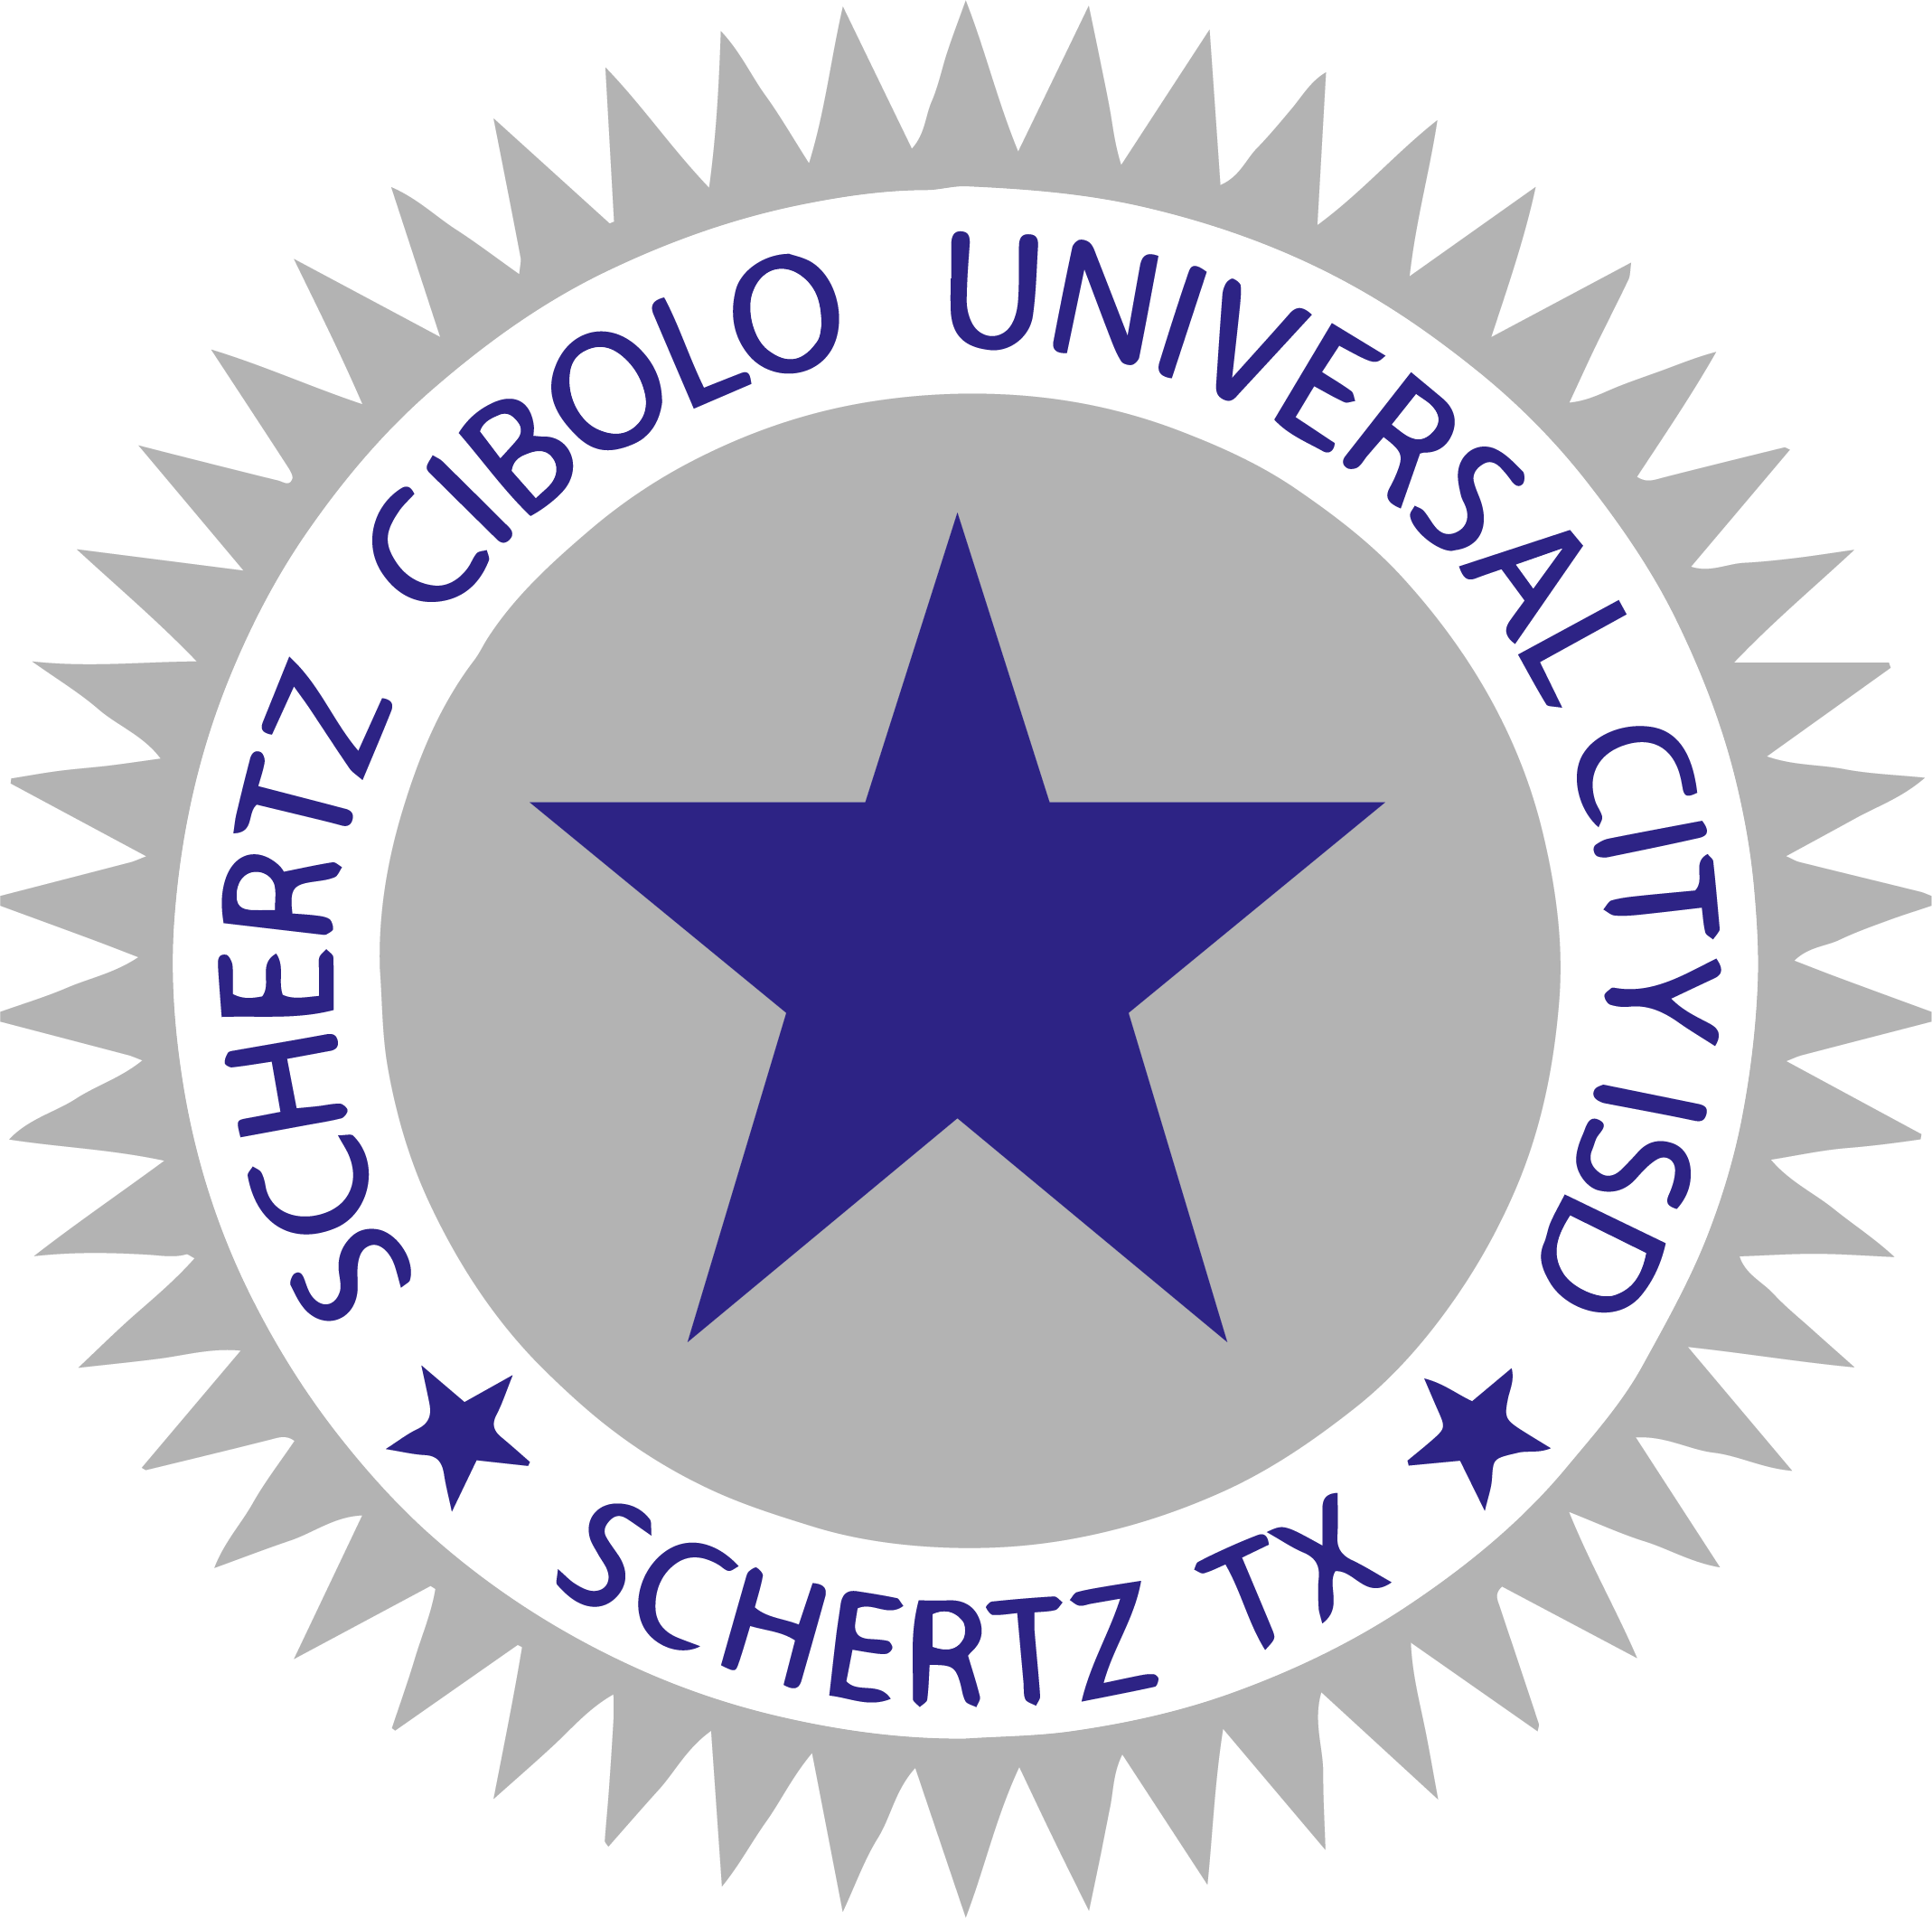 Schertz-Cibolo-Universal City ISD's Logo